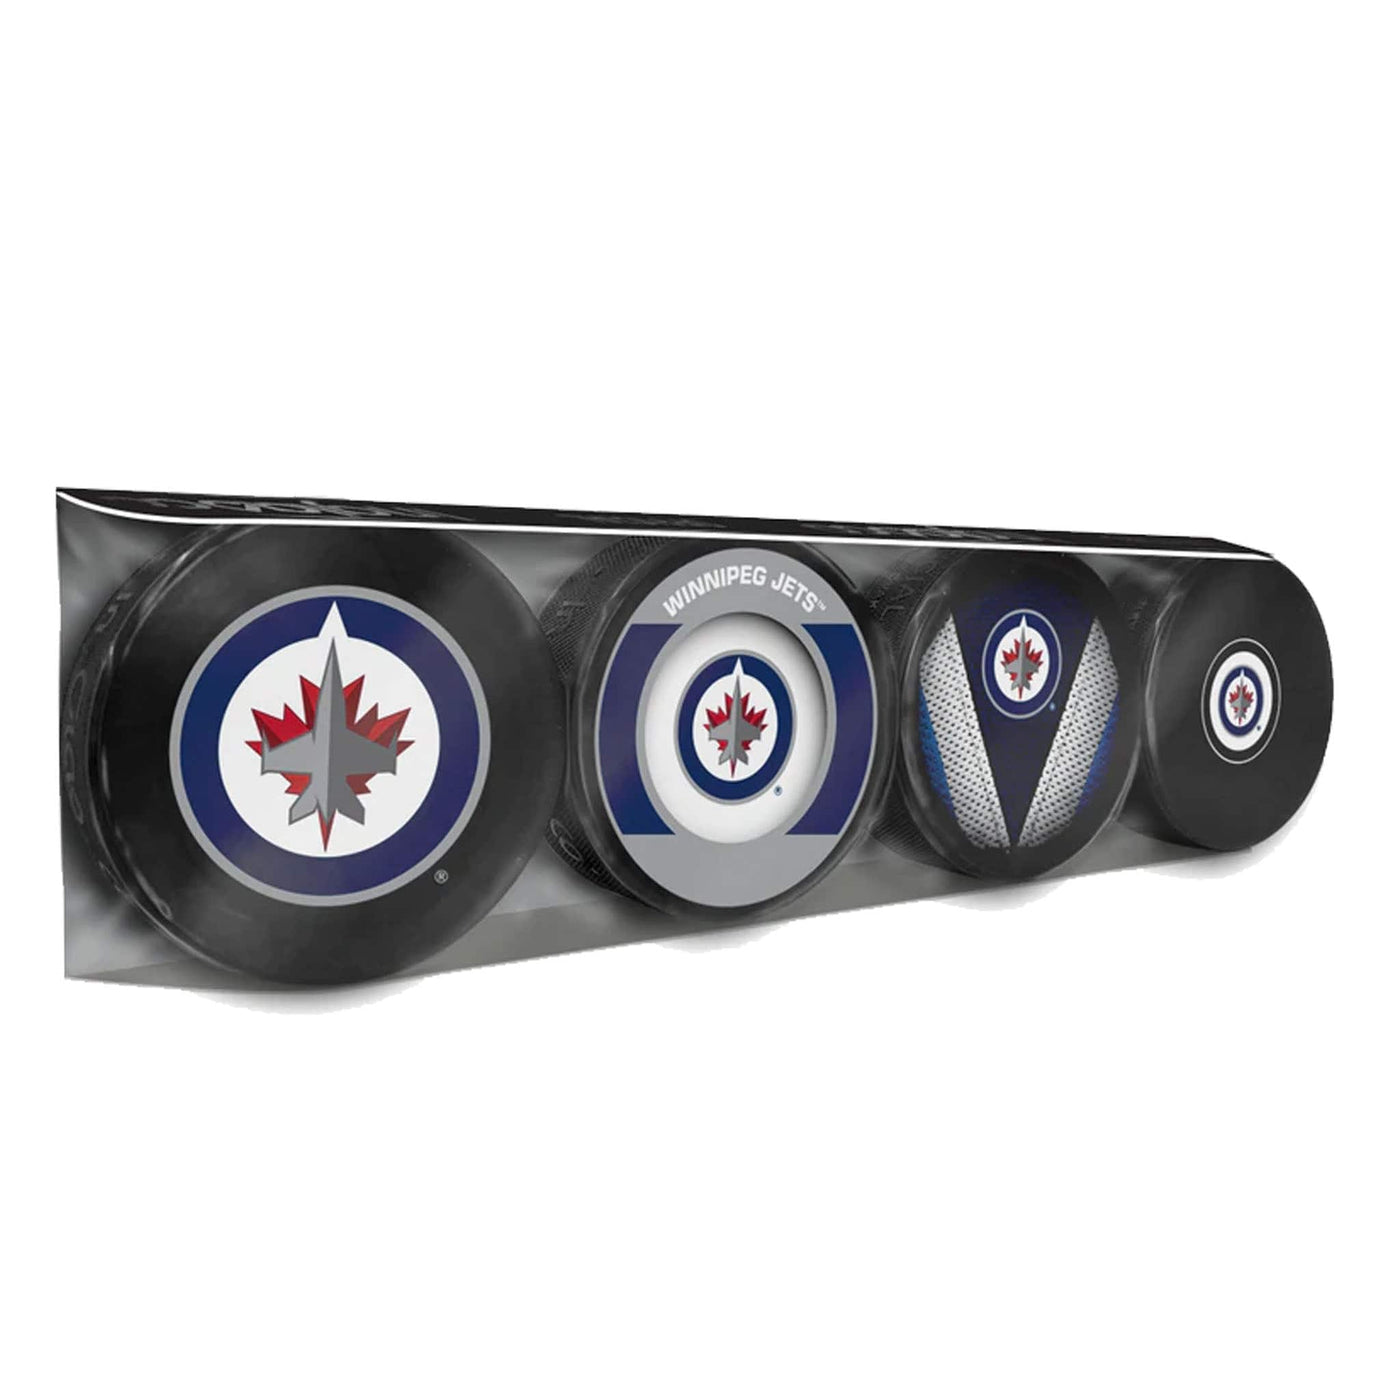 Winnipeg Jets Inglasco NHL Logo Hockey Puck (4 Pack) - The Hockey Shop Source For Sports